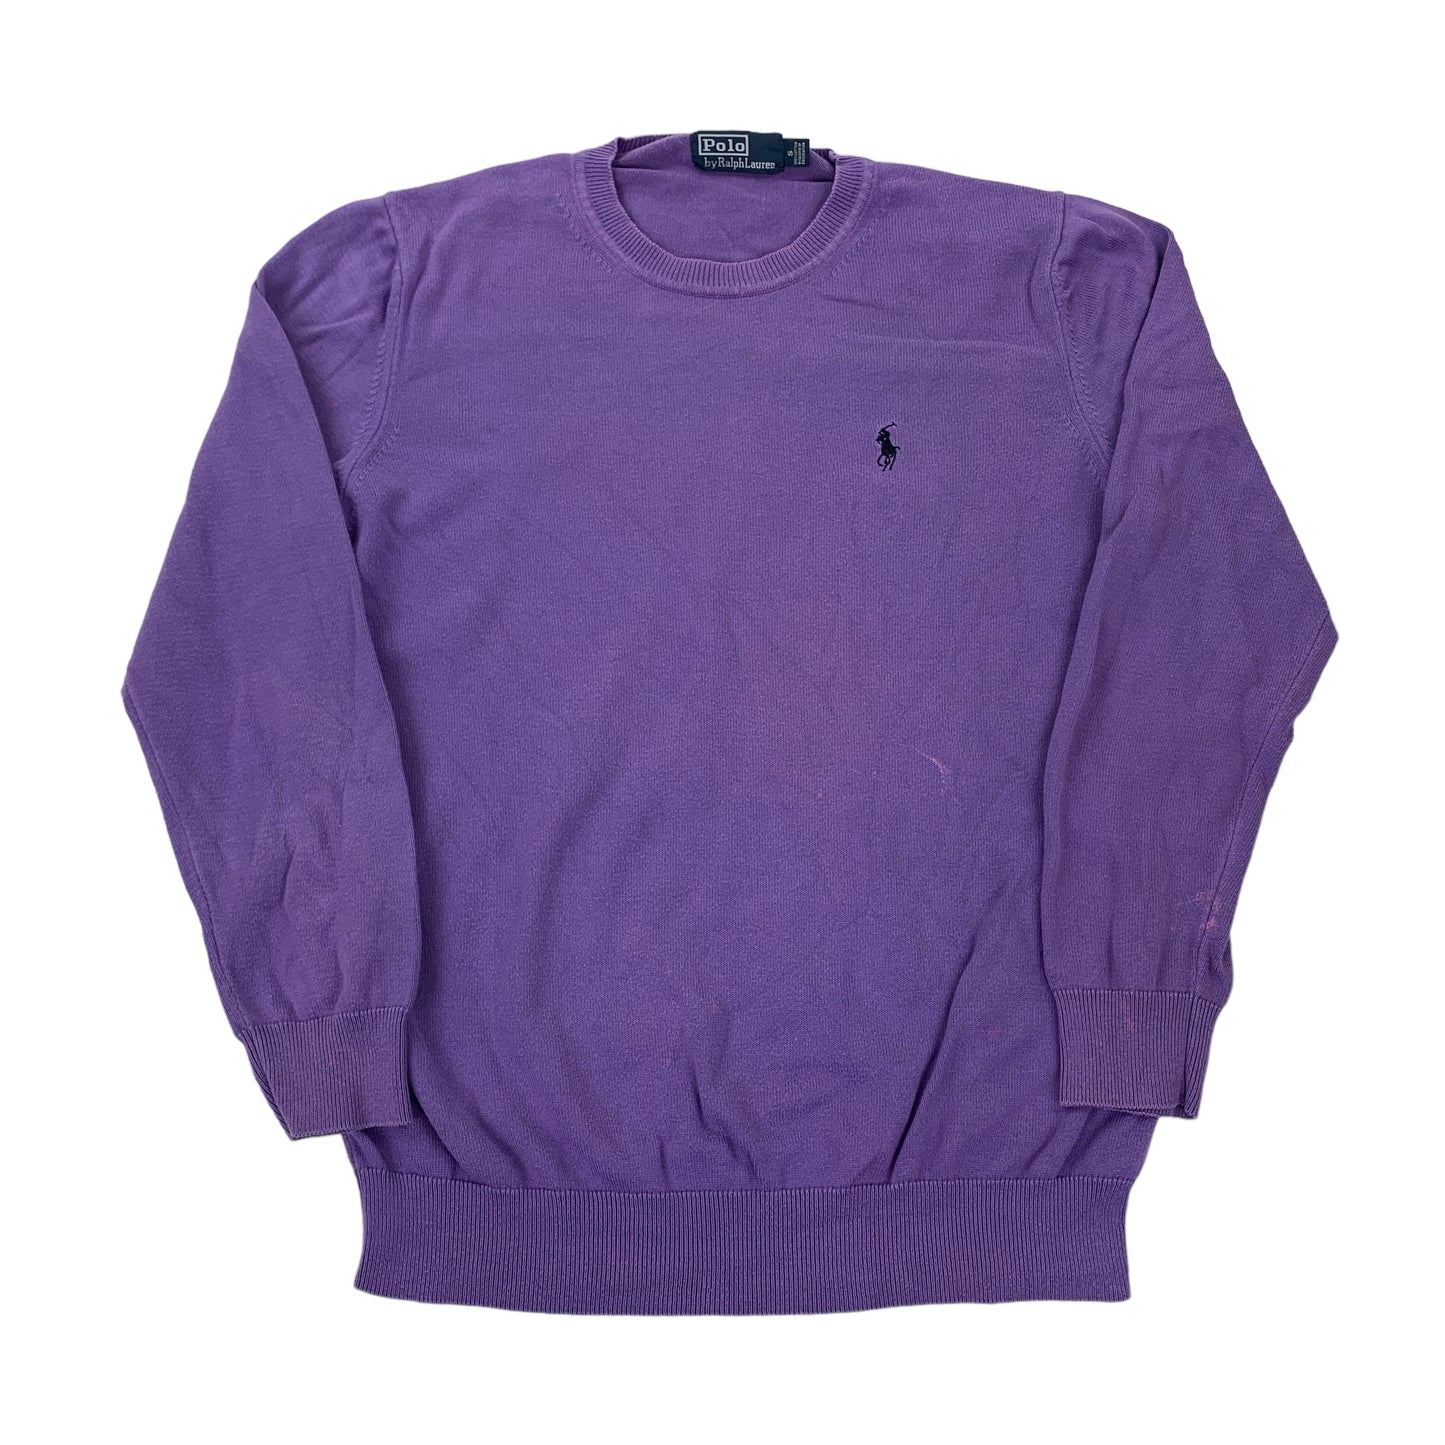 Polo Ralph Lauren Sweater - S